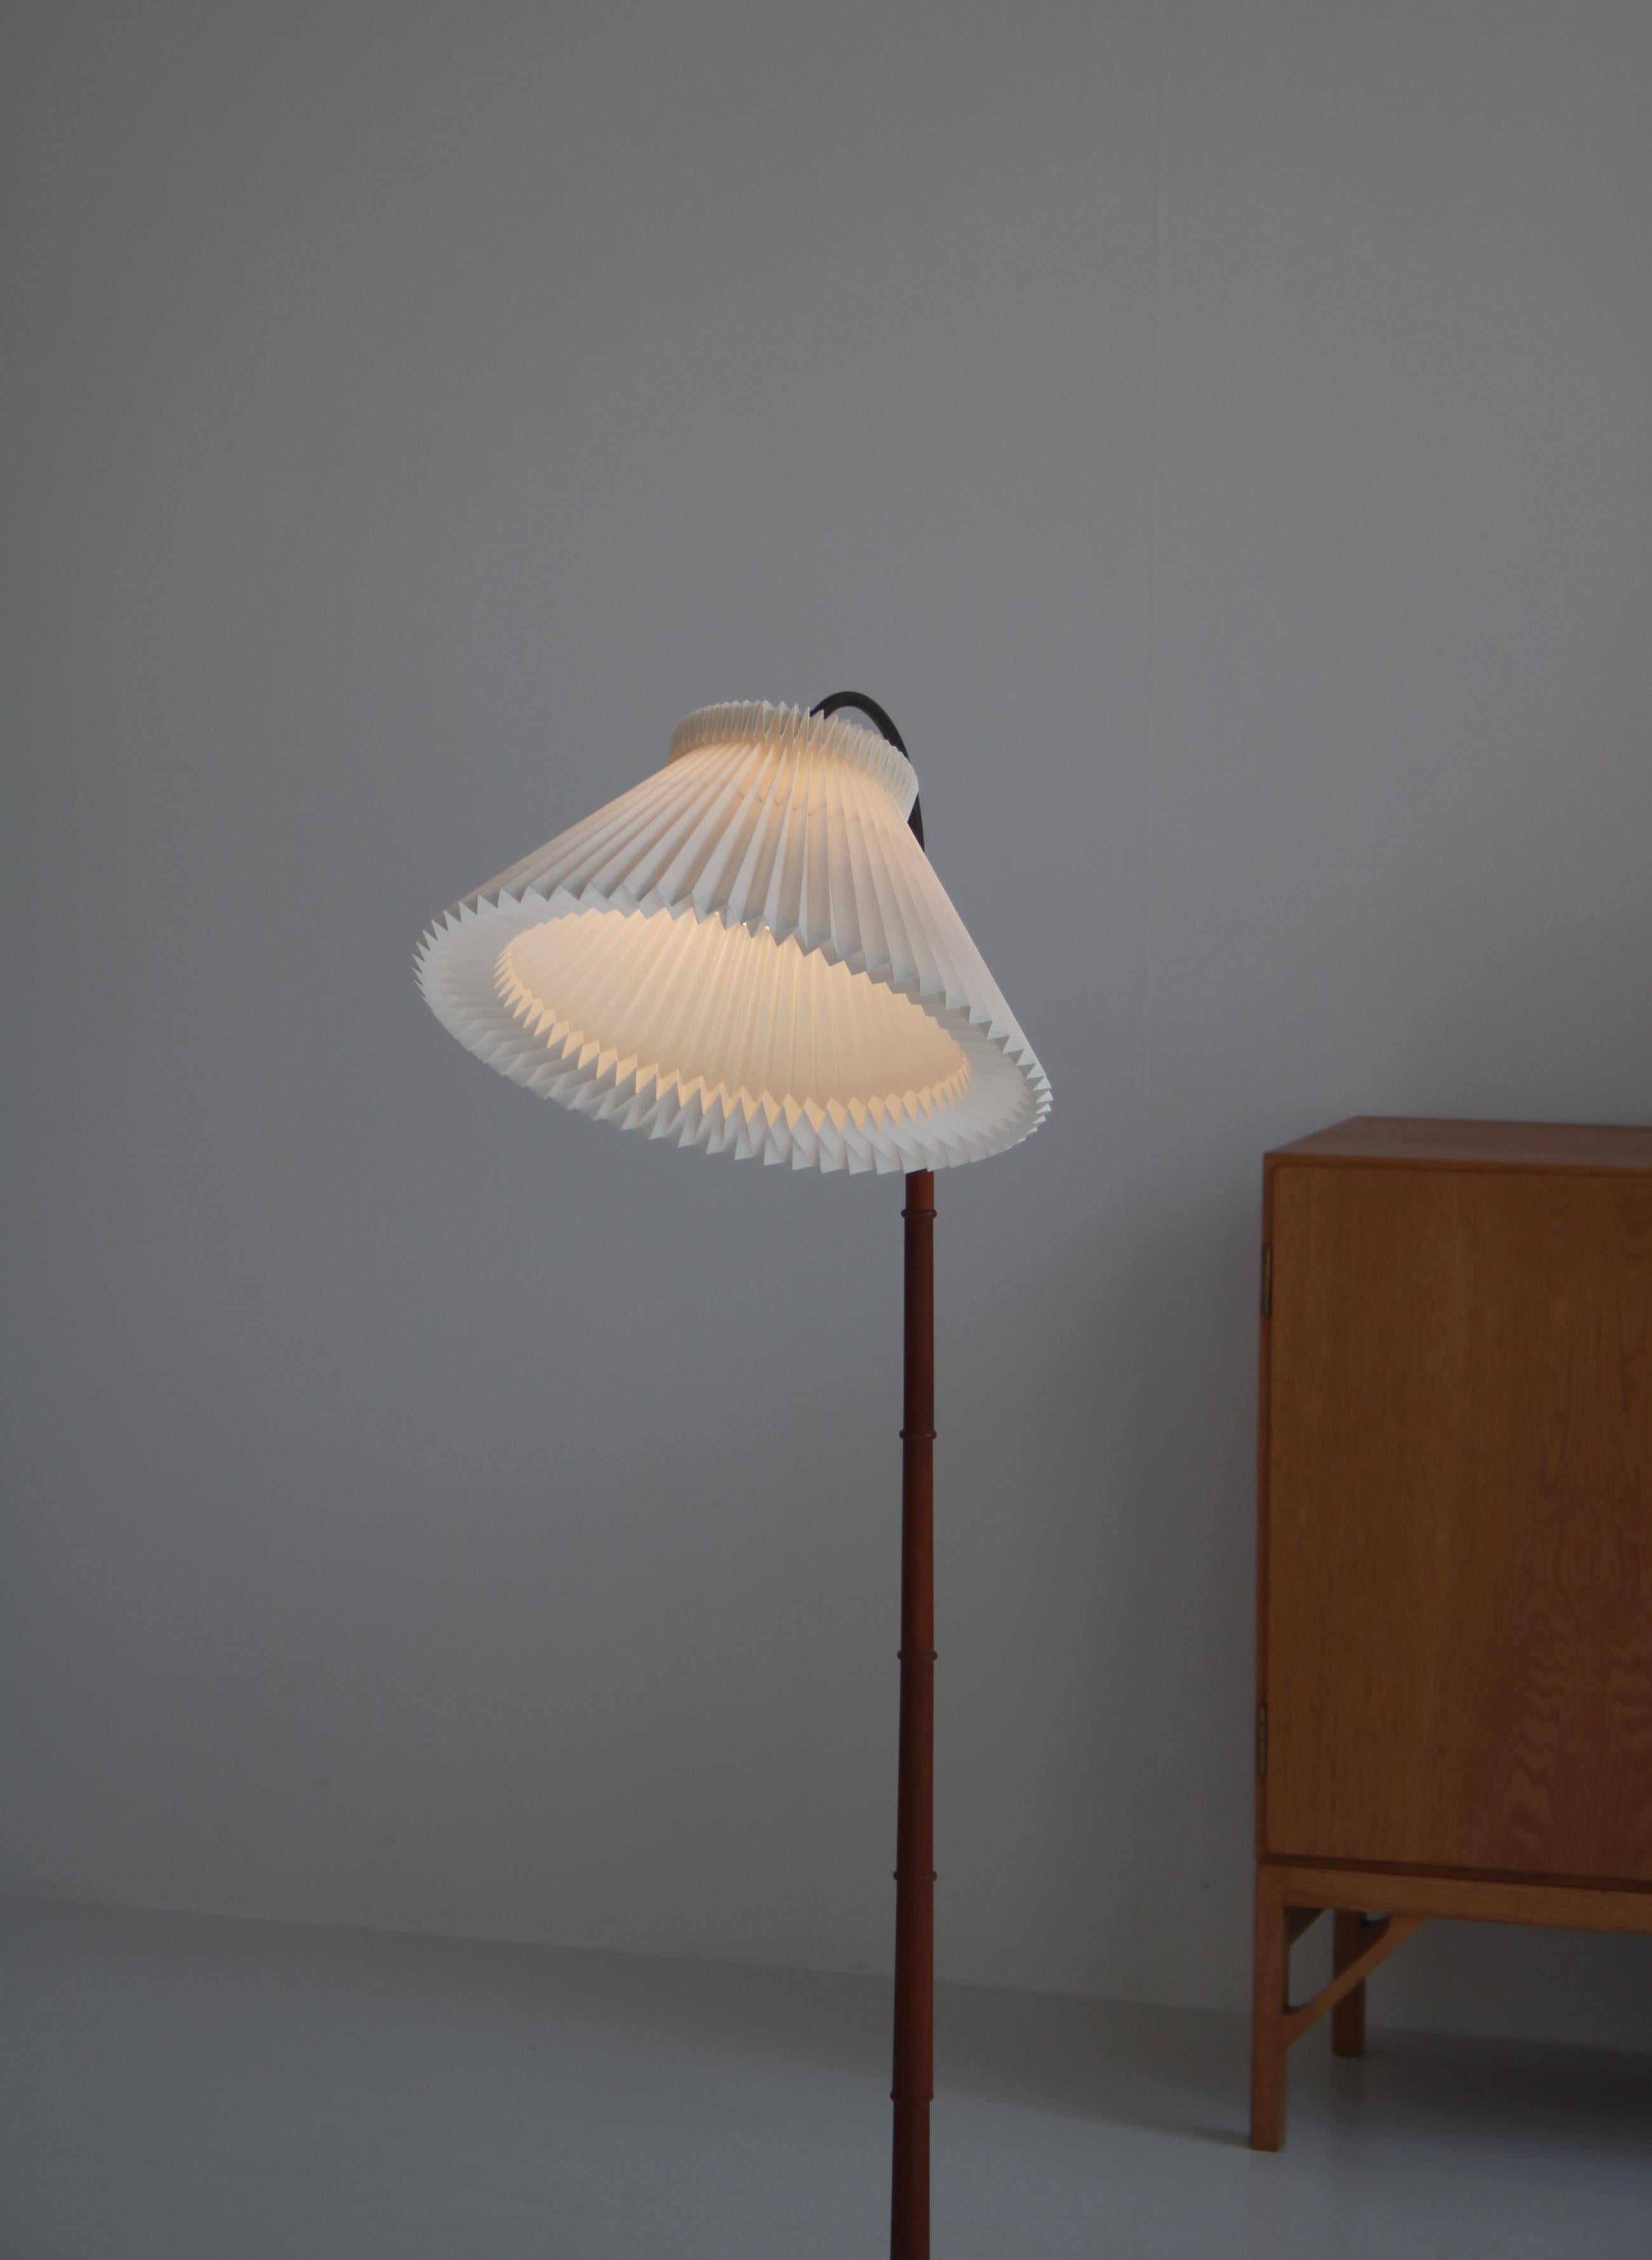 Scandinavian Modern Danish Modern Floor Lamp in Teak with Hand Folded Le Klint Shade, 1950s For Sale